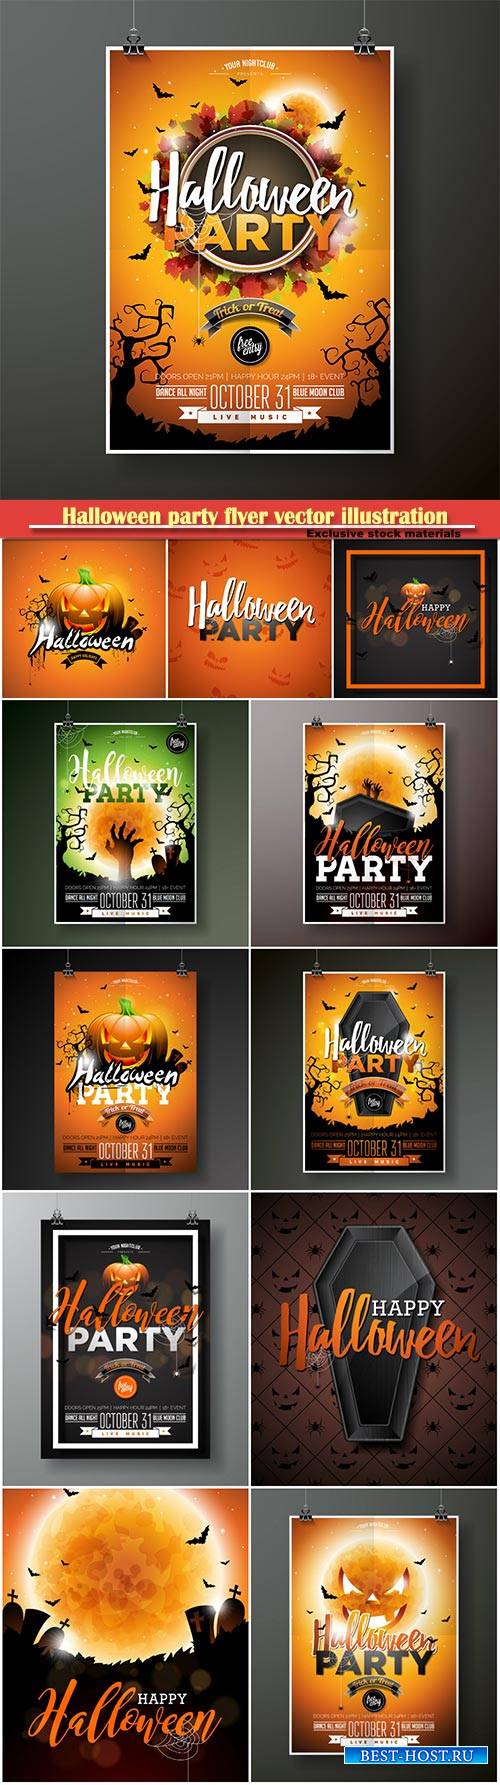 Halloween party flyer vector illustration with moon on orange sky backgroun ...